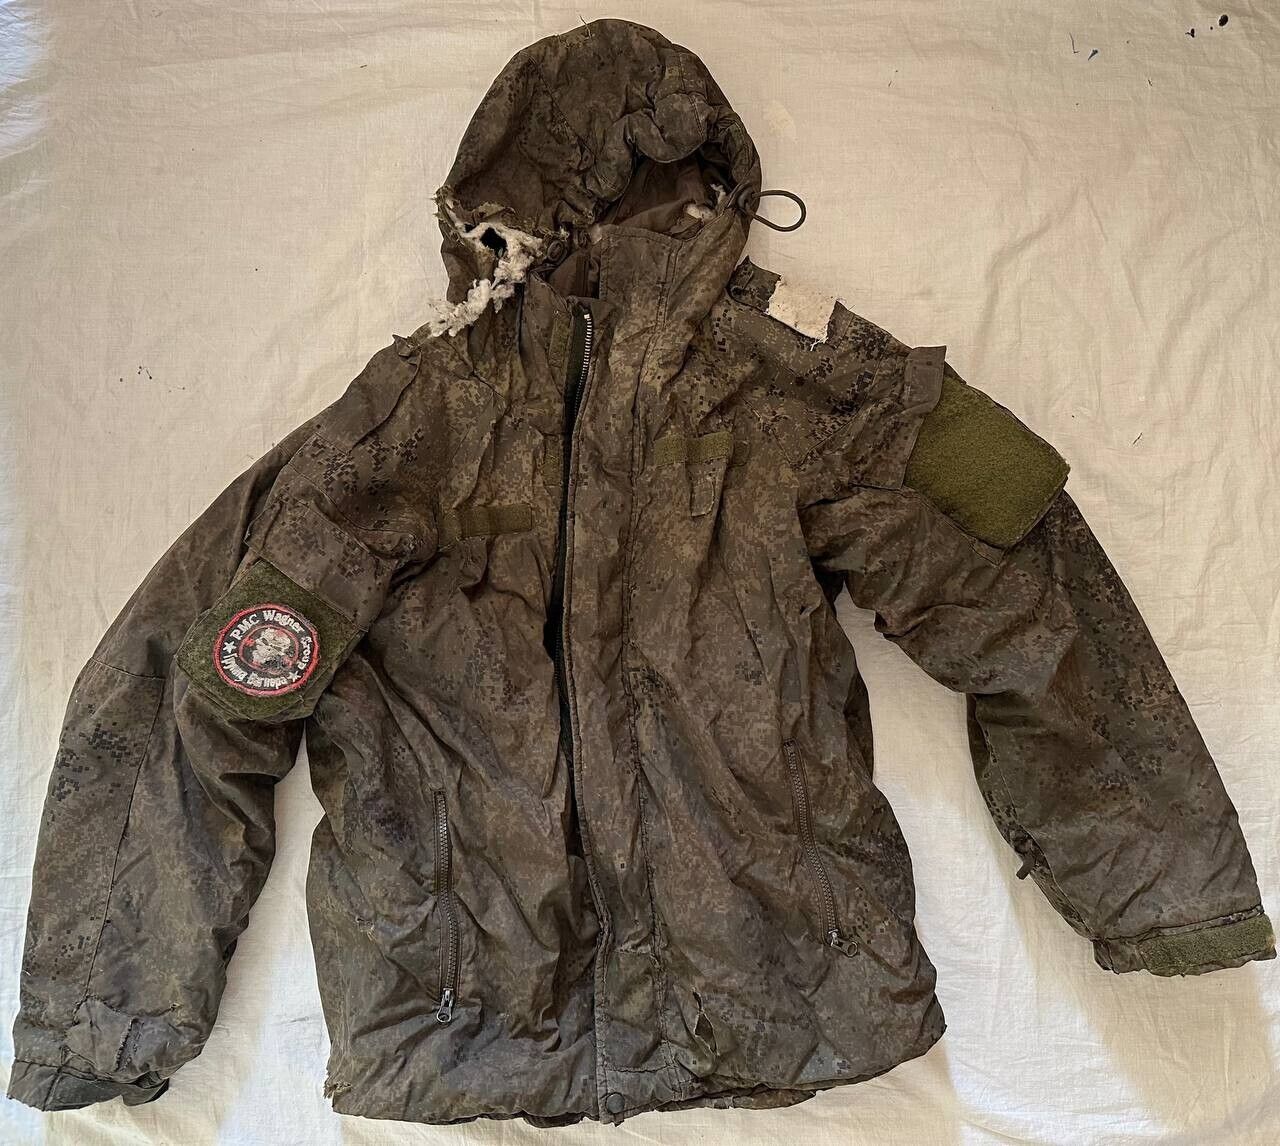 Russian Army Winter Jacket W A G Uniform Chevrons Patches Flag Hat Ratnik Boots